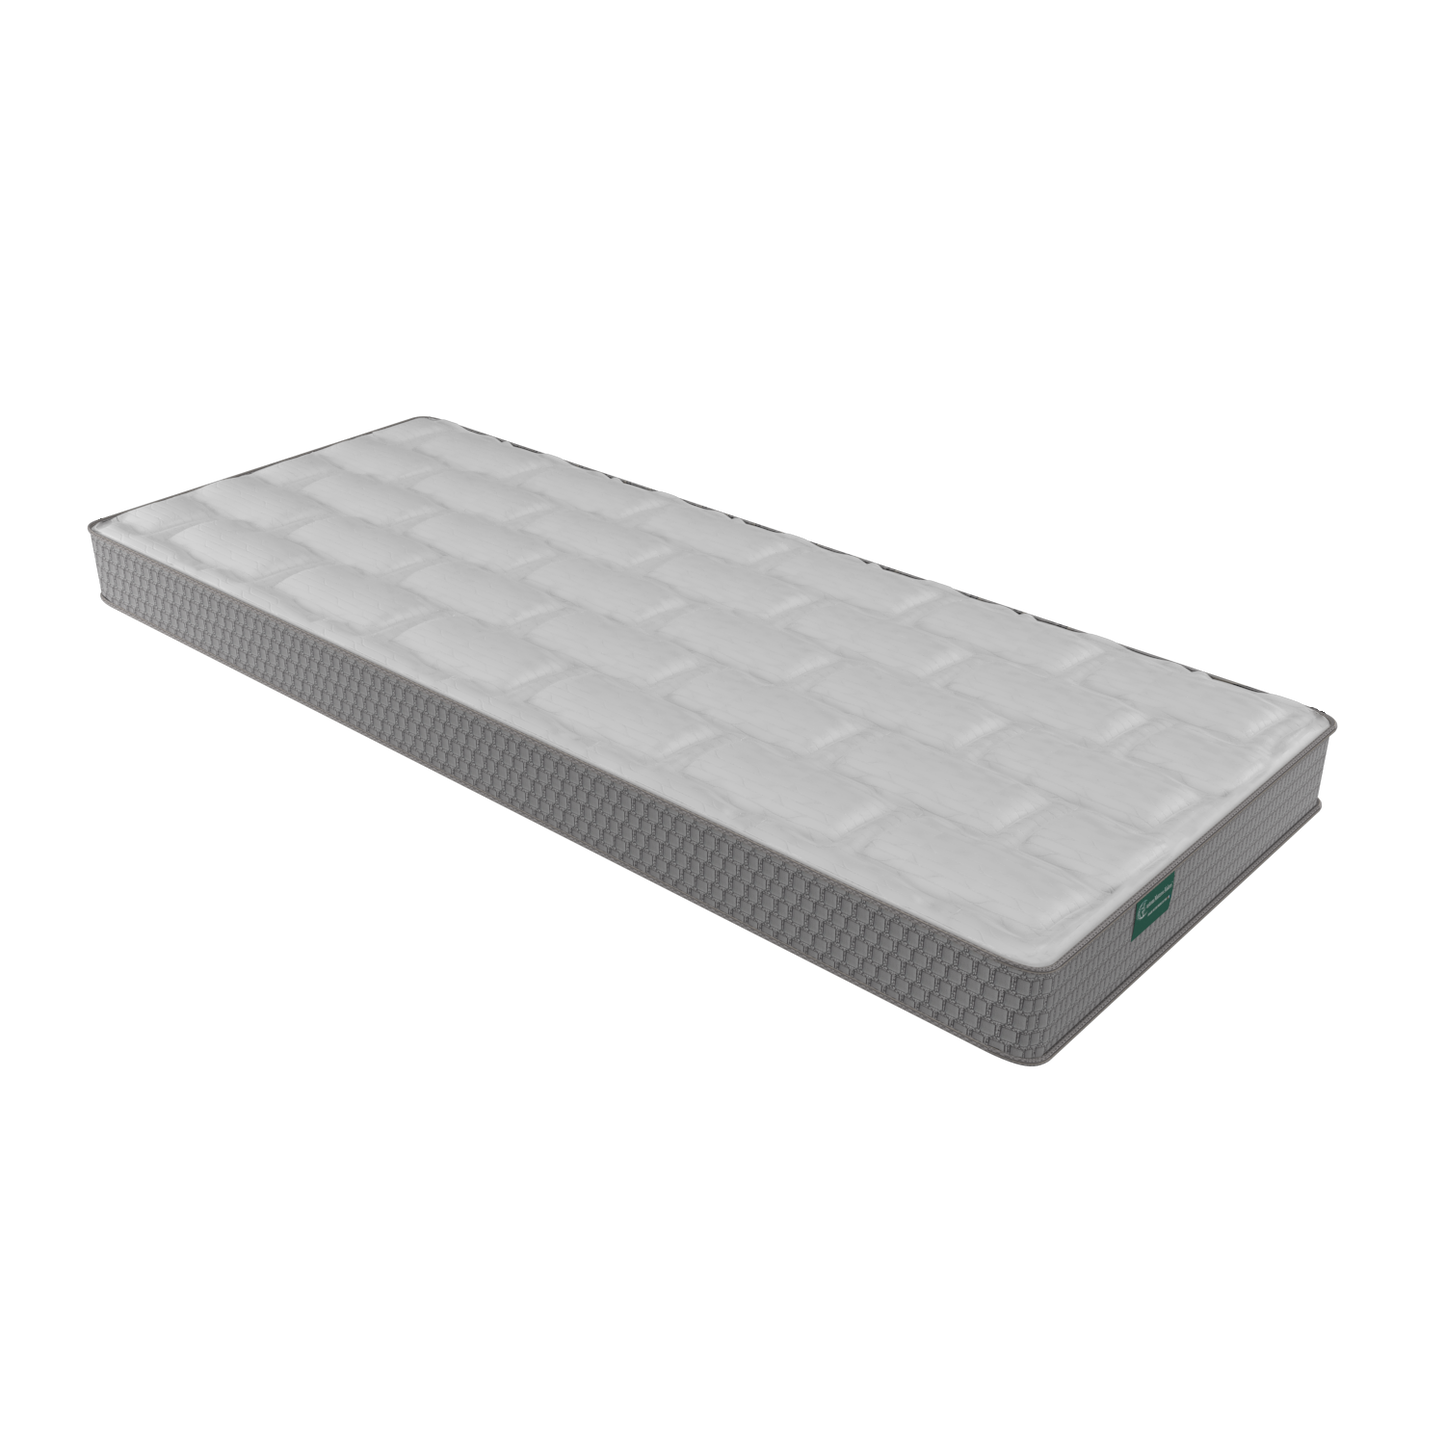 Cape - 51" x 78" mattress w/ angle cut